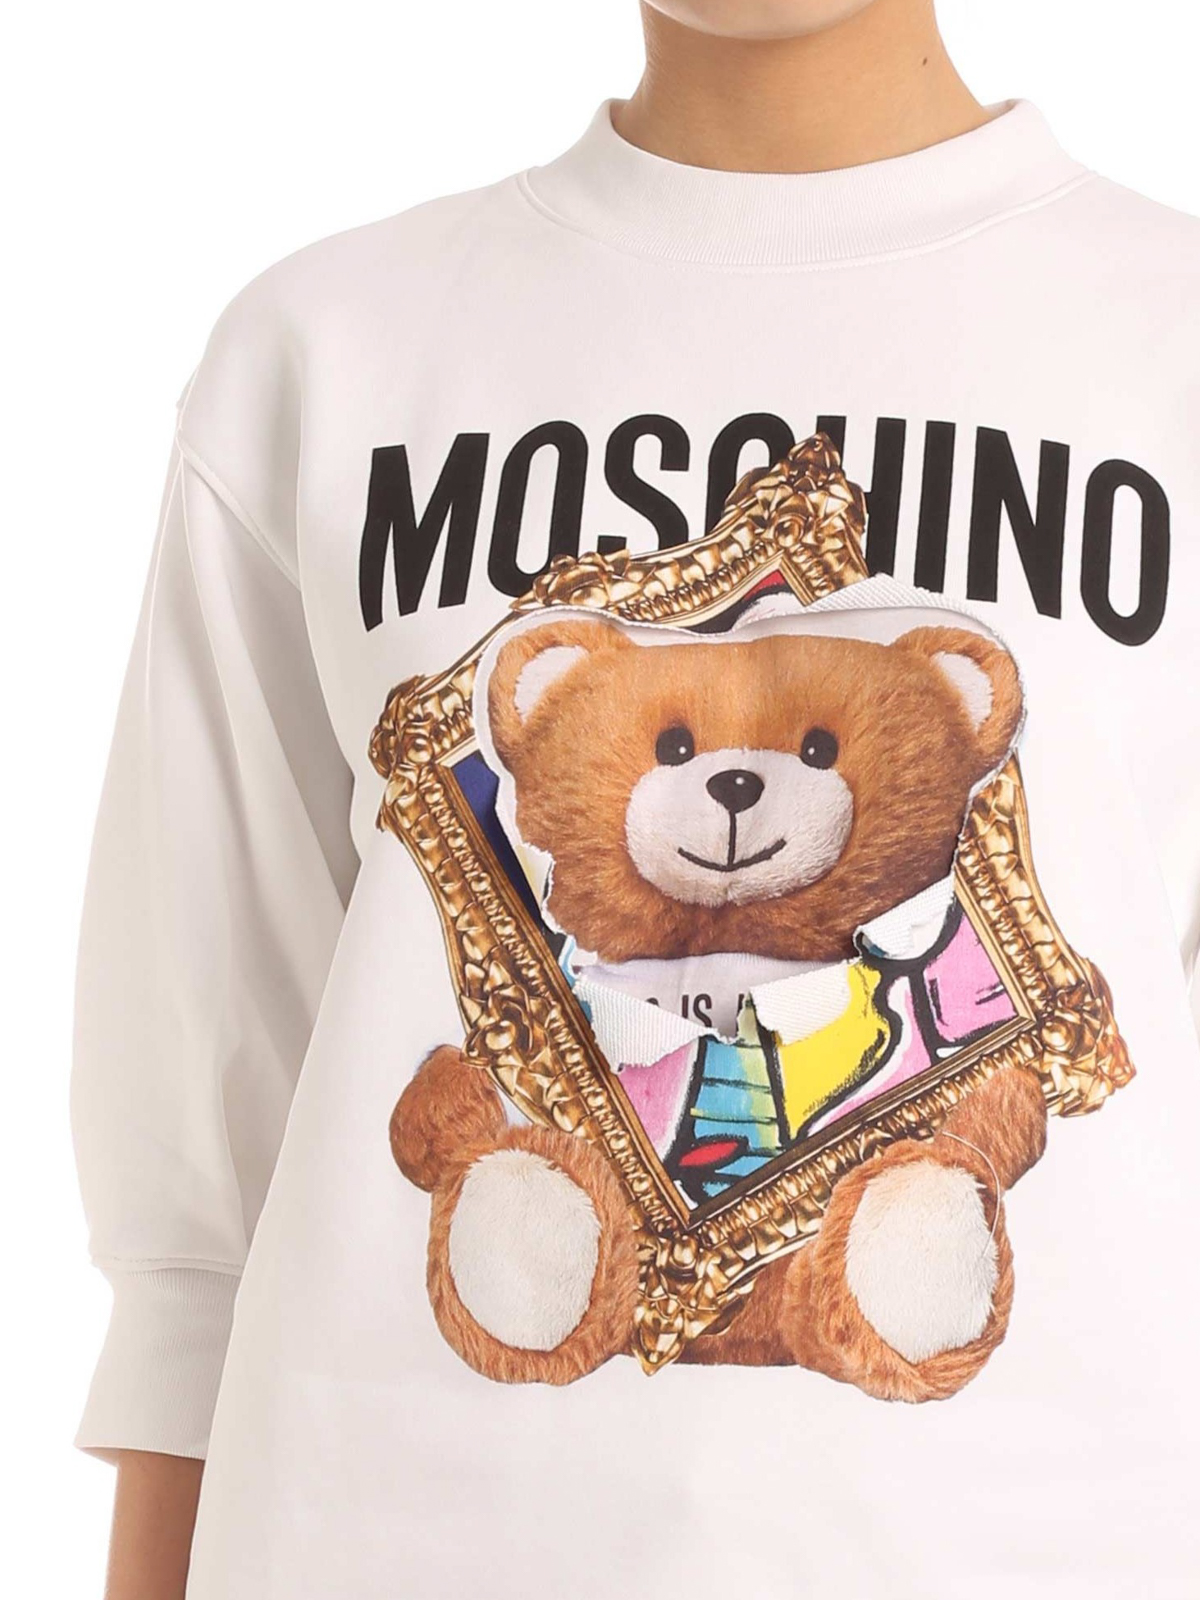 Teddy Bear Sweatshirts & Hoodies for Sale